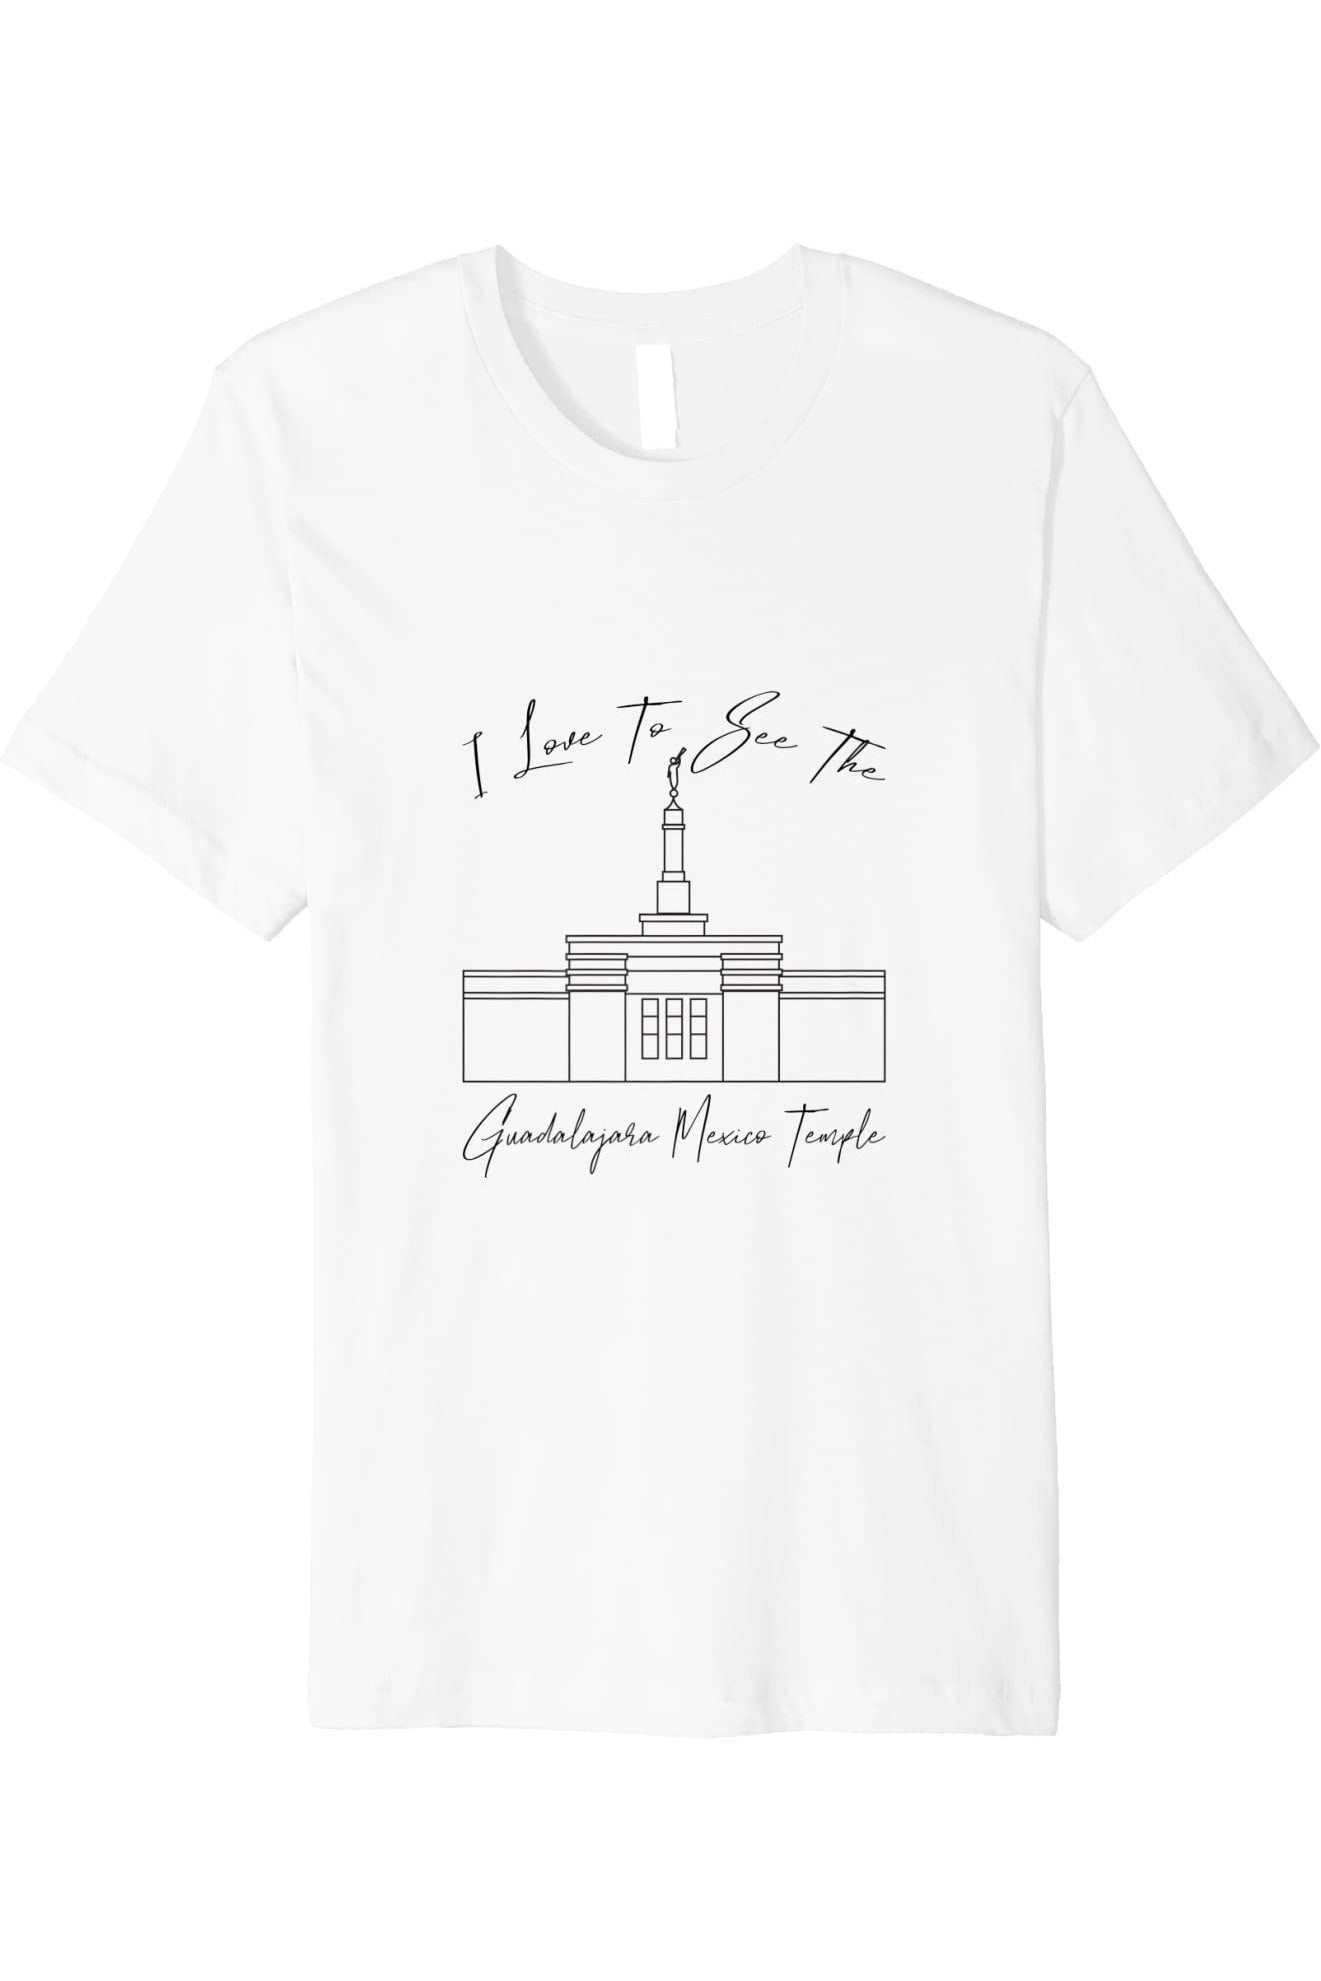 Guadalajara Mexico Temple T-Shirt - Premium - Calligraphy Style (English) US